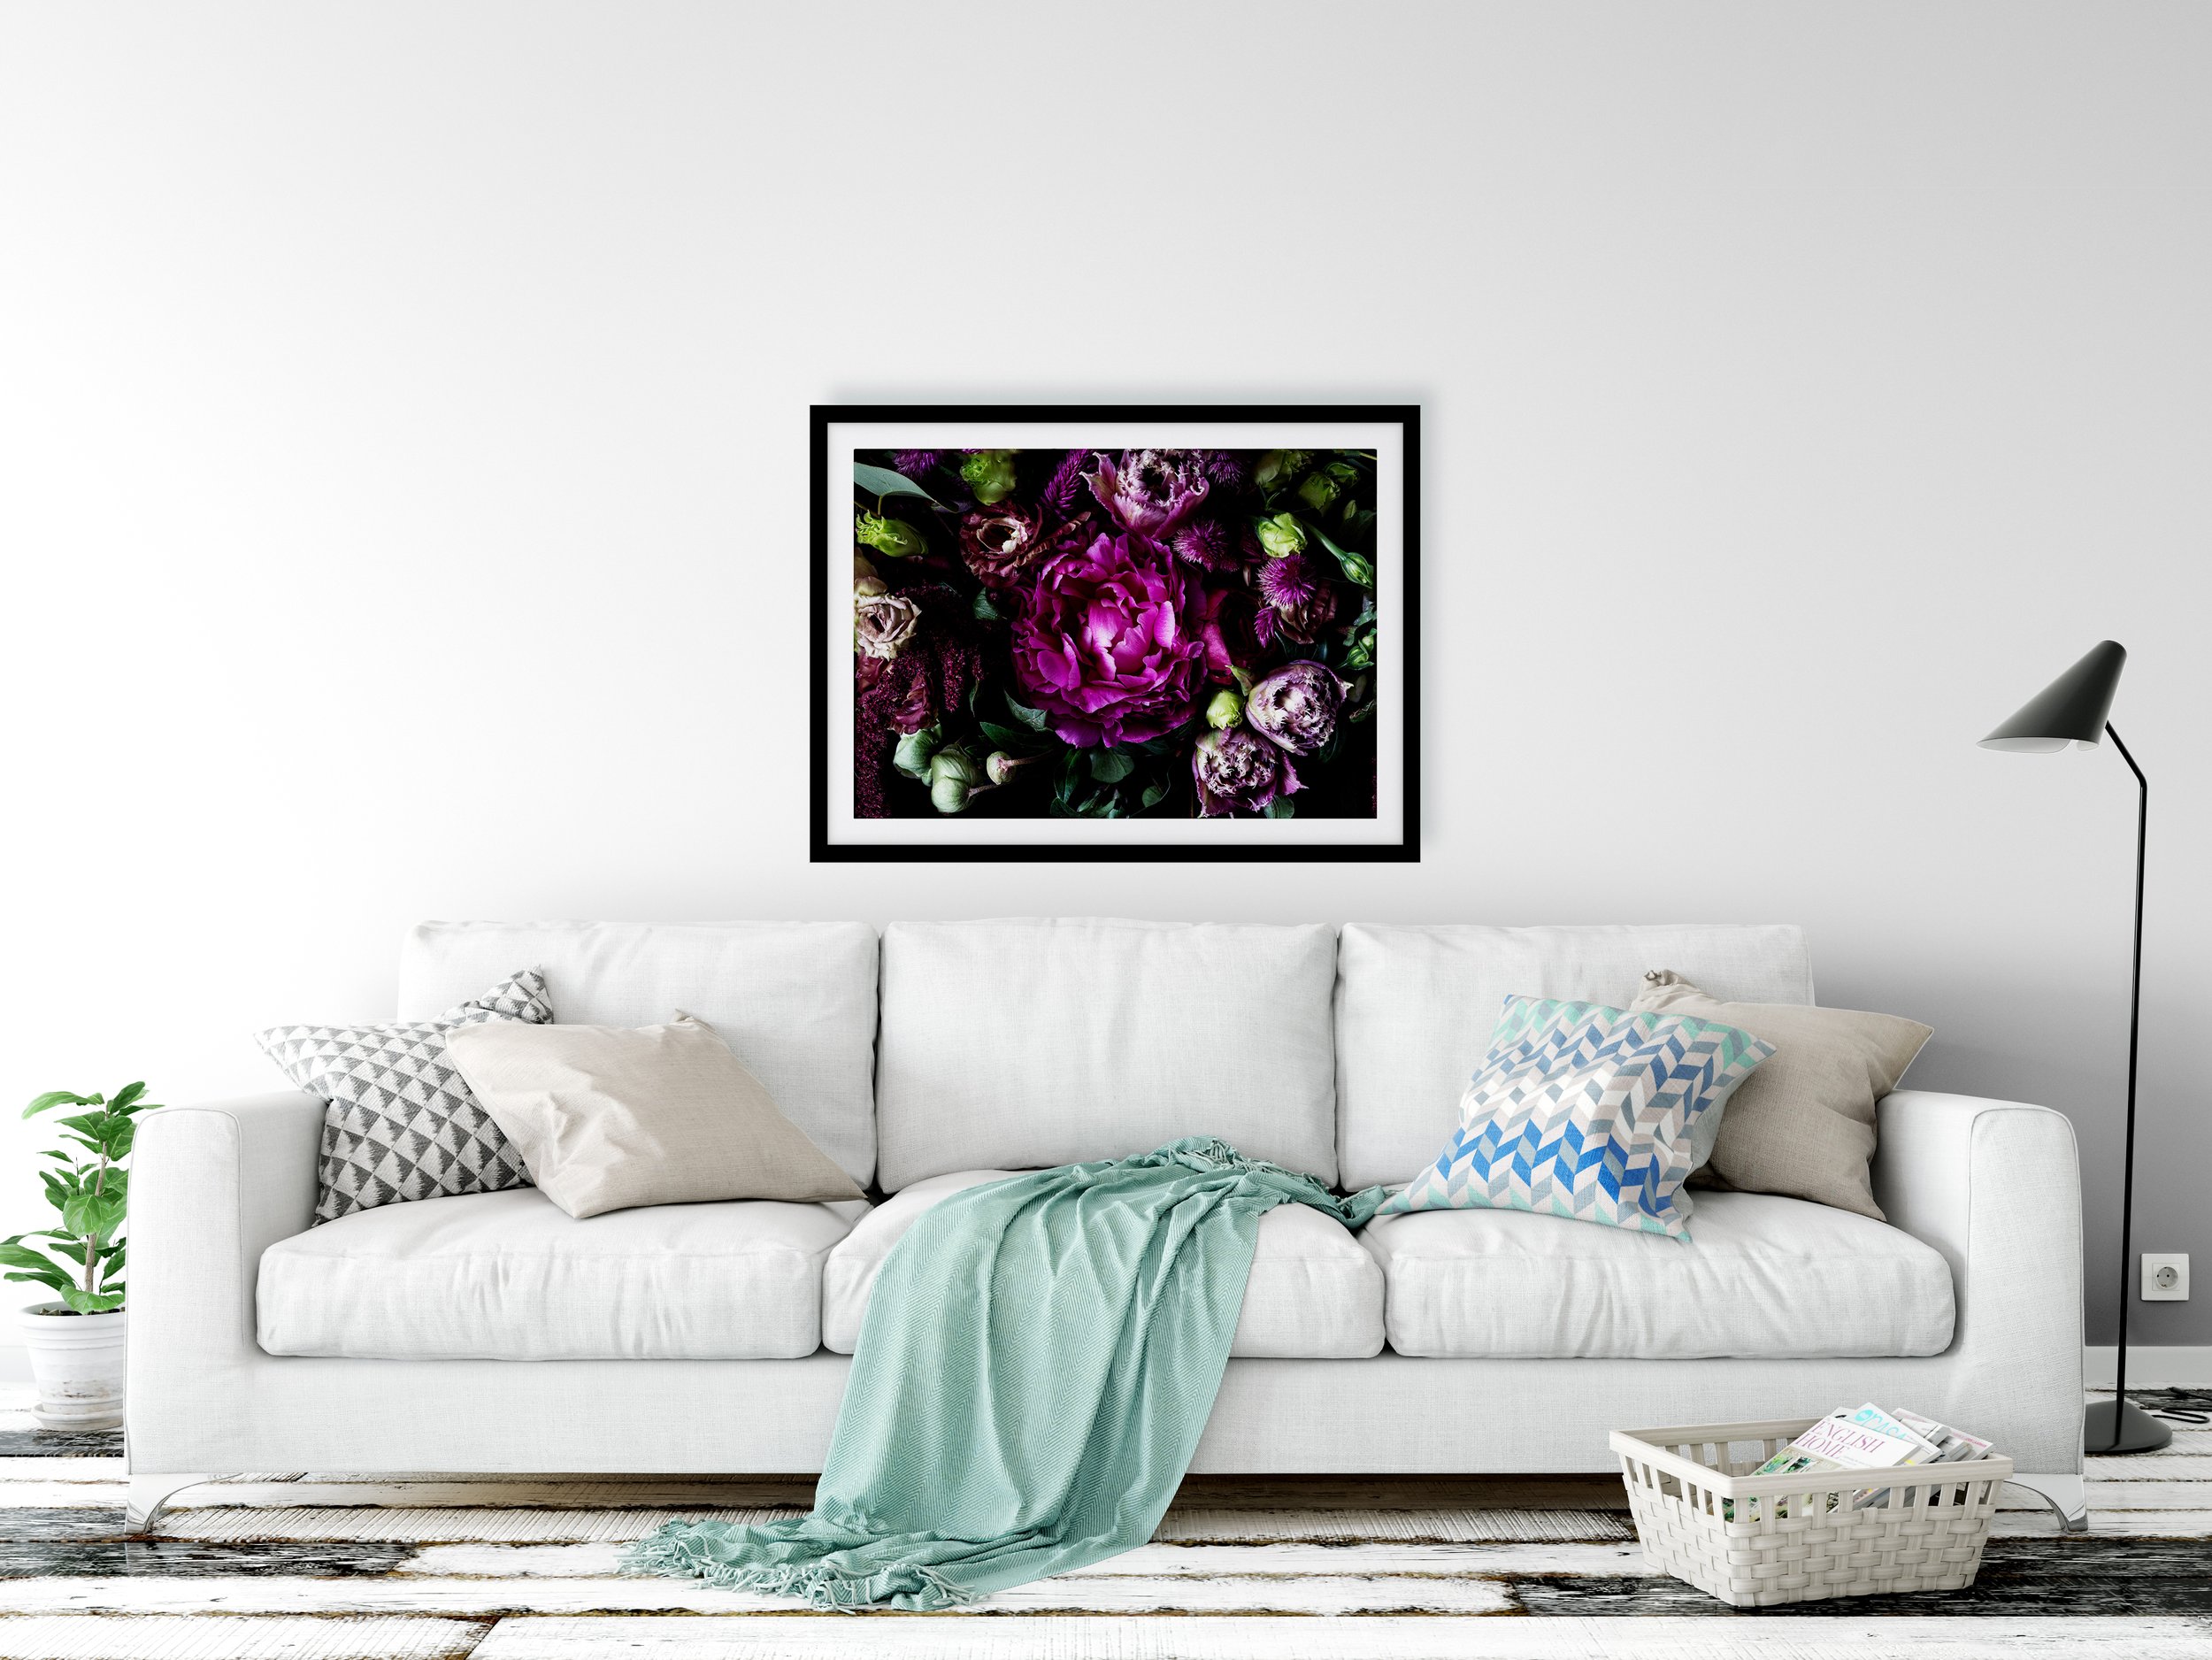 Floral artworks for interior design | flower photography | wall art ...